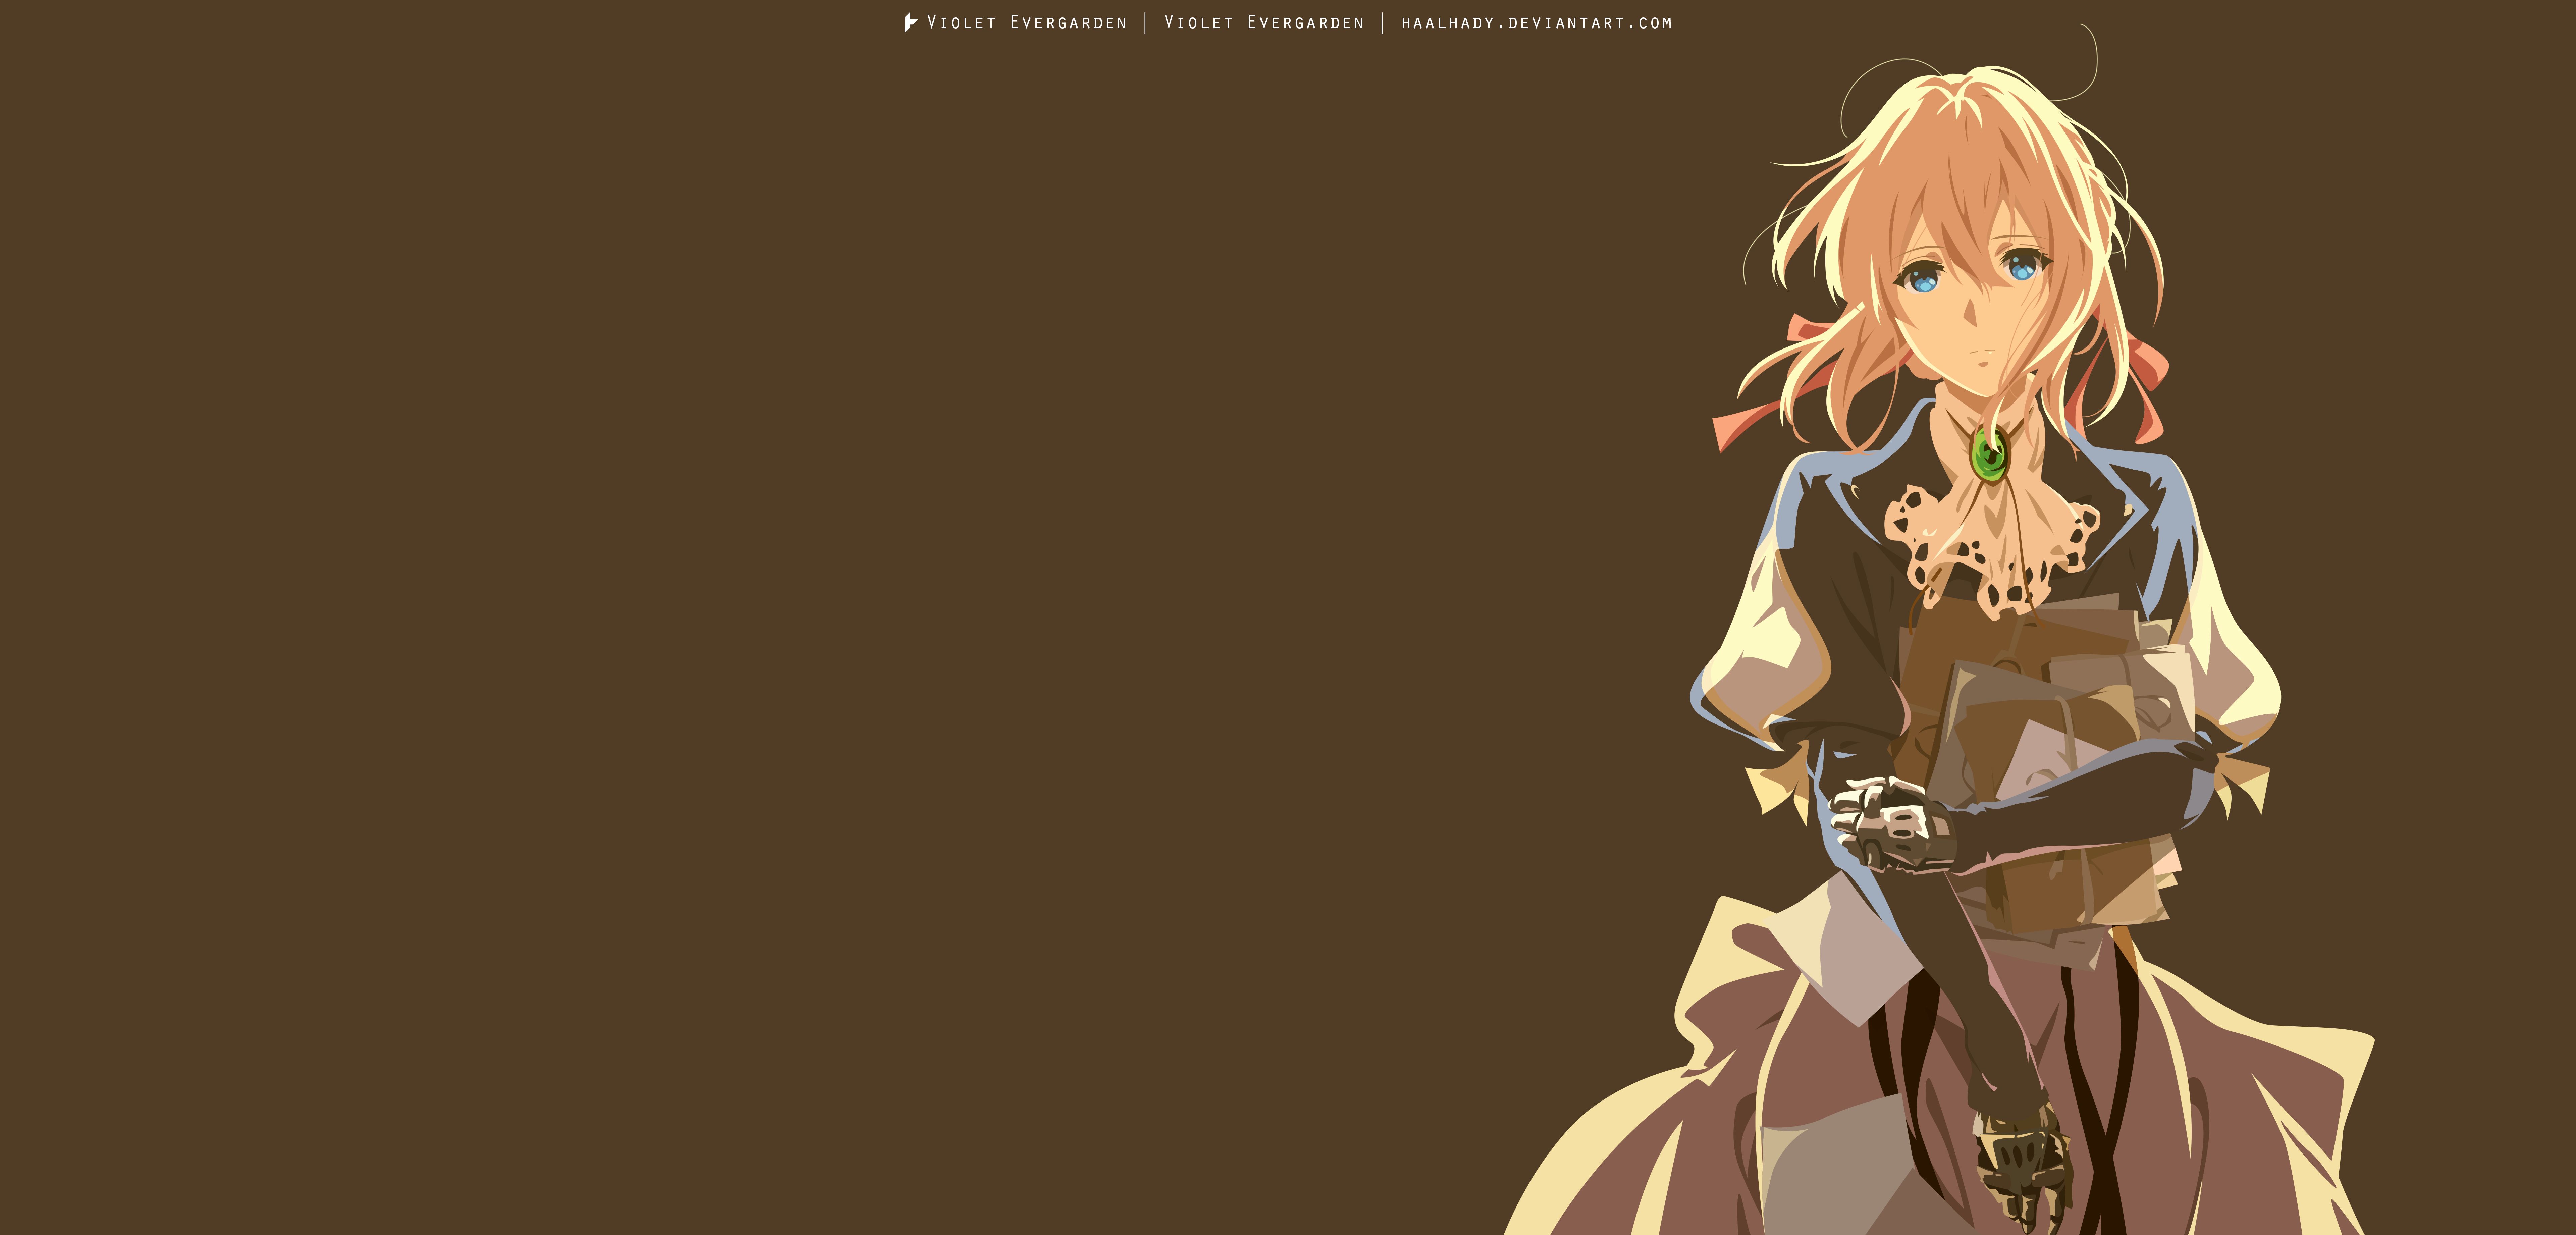 907860 Fondos de pantalla e Violeta Evergarden (Anime) imágenes en el escritorio. Descarga protectores de pantalla  en tu PC gratis